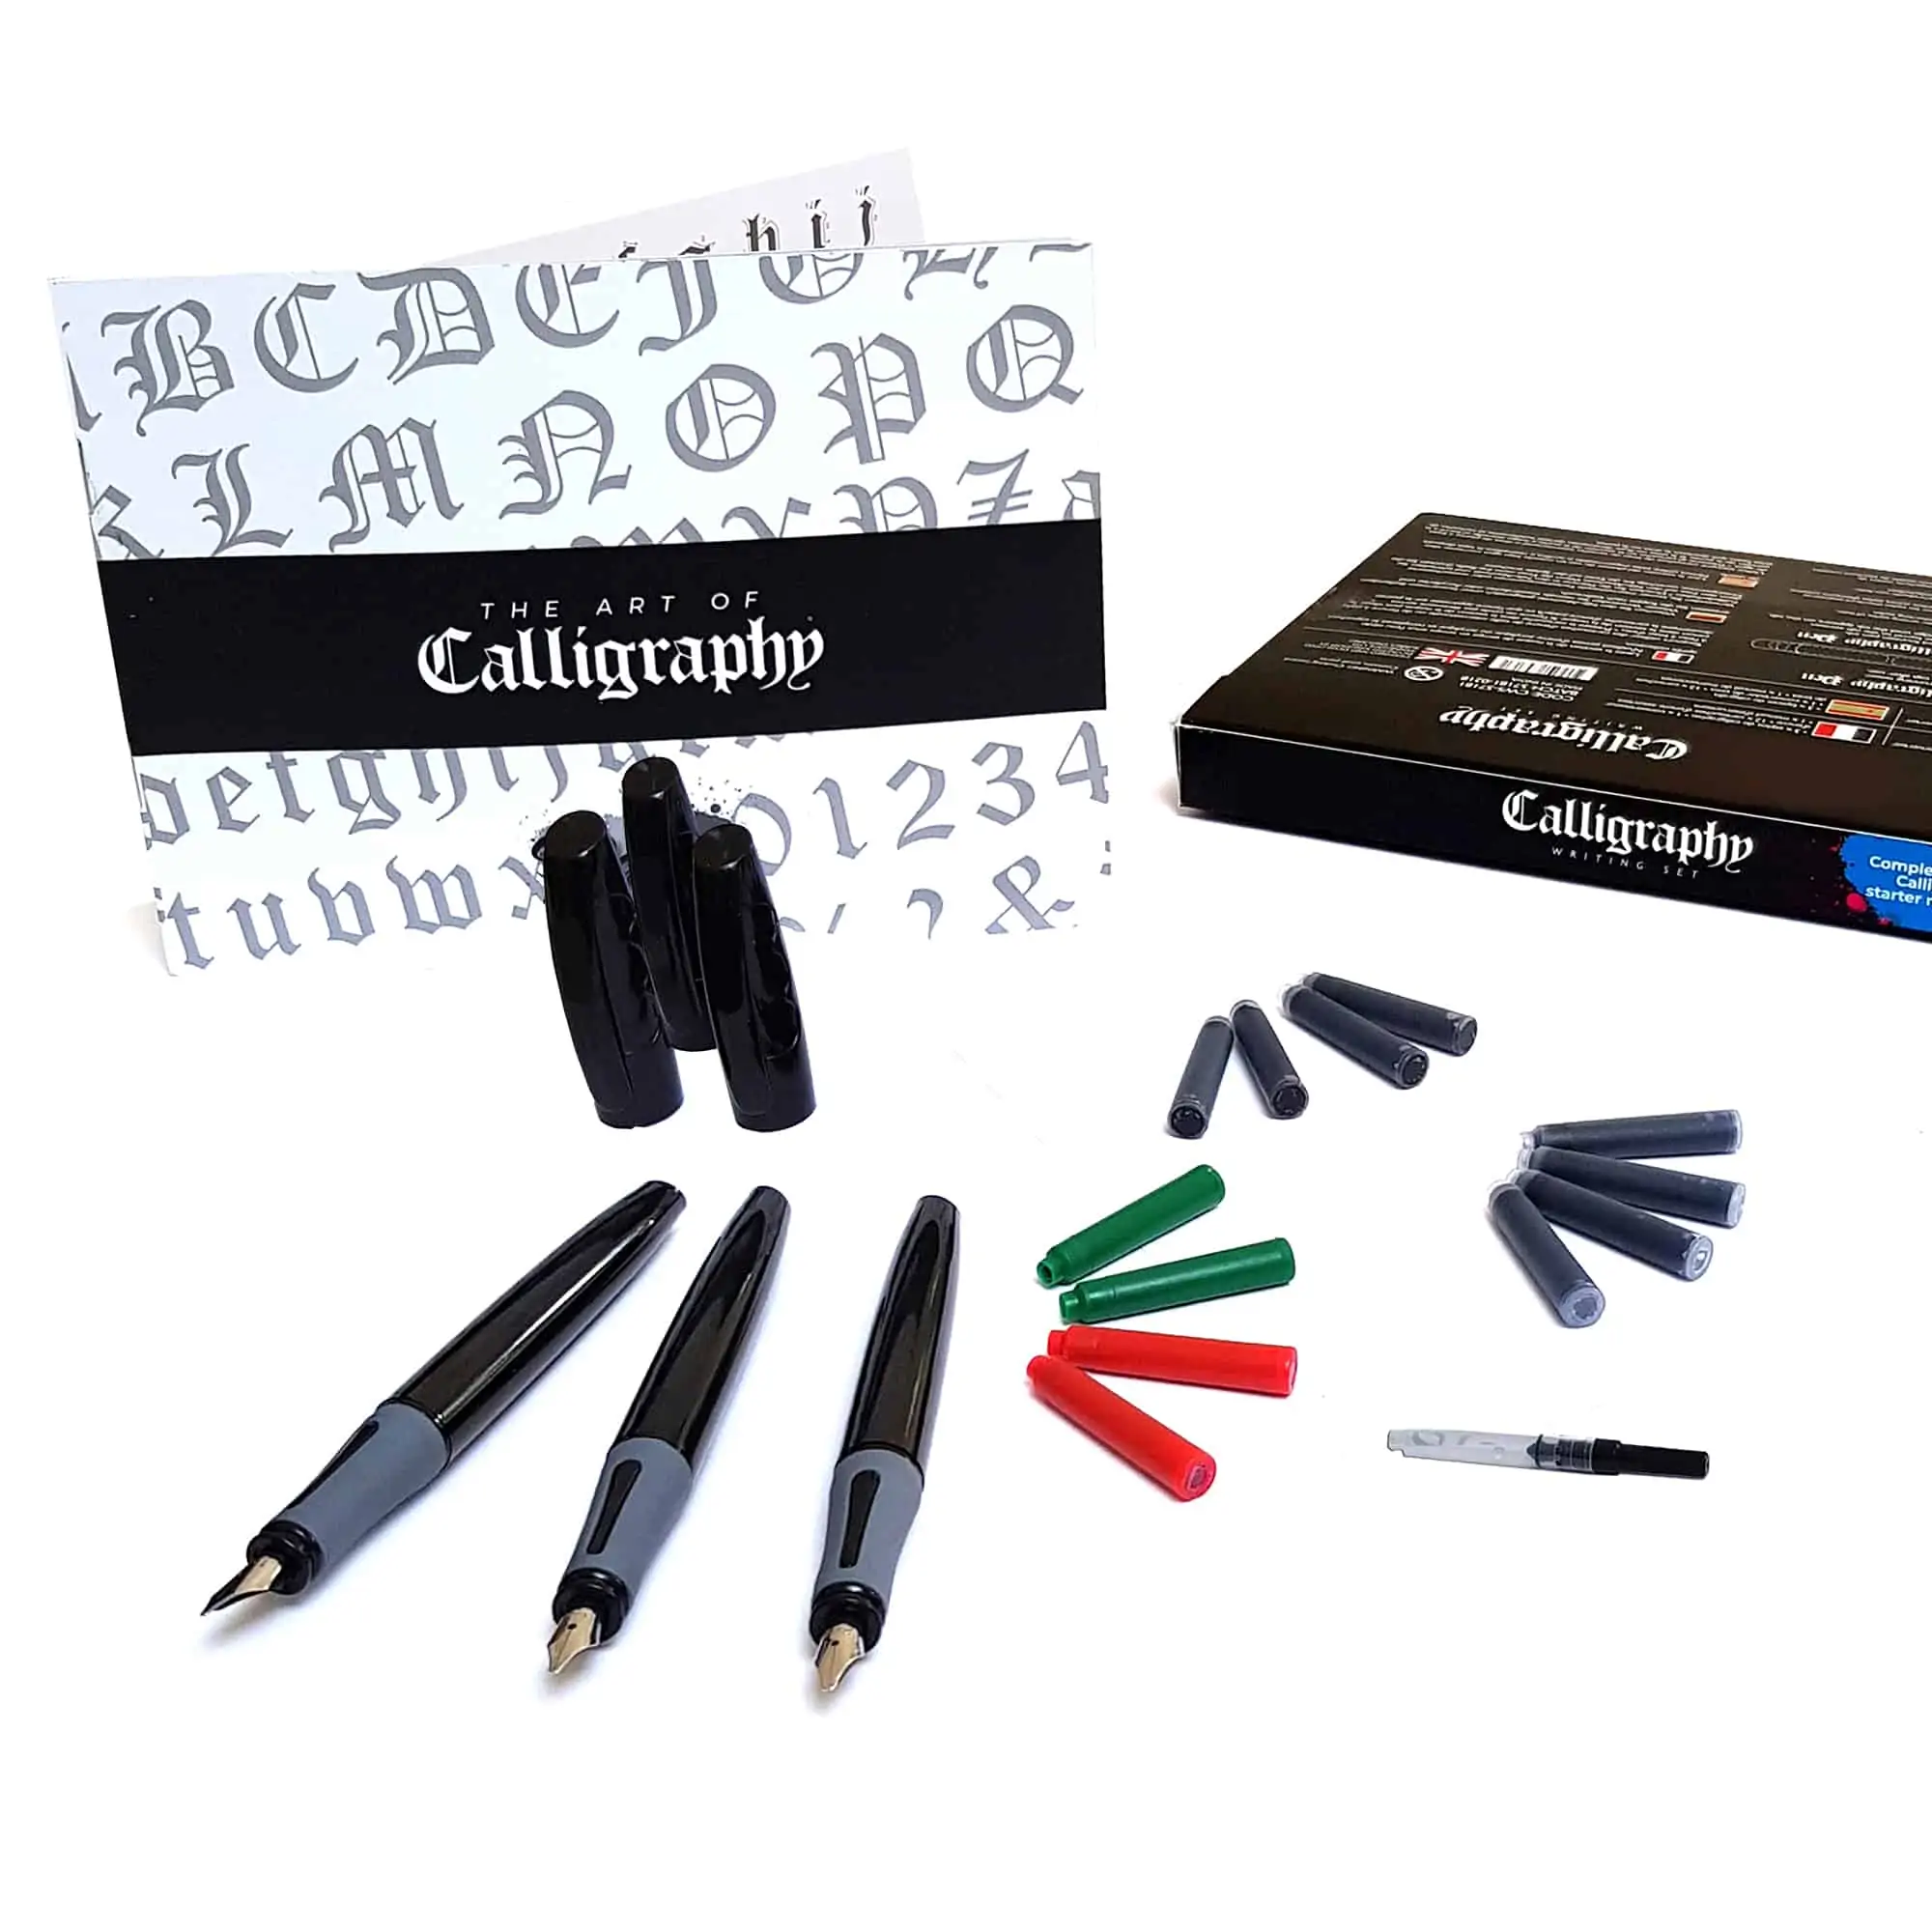 Complete Calligraphy Starter Set - By Zieler